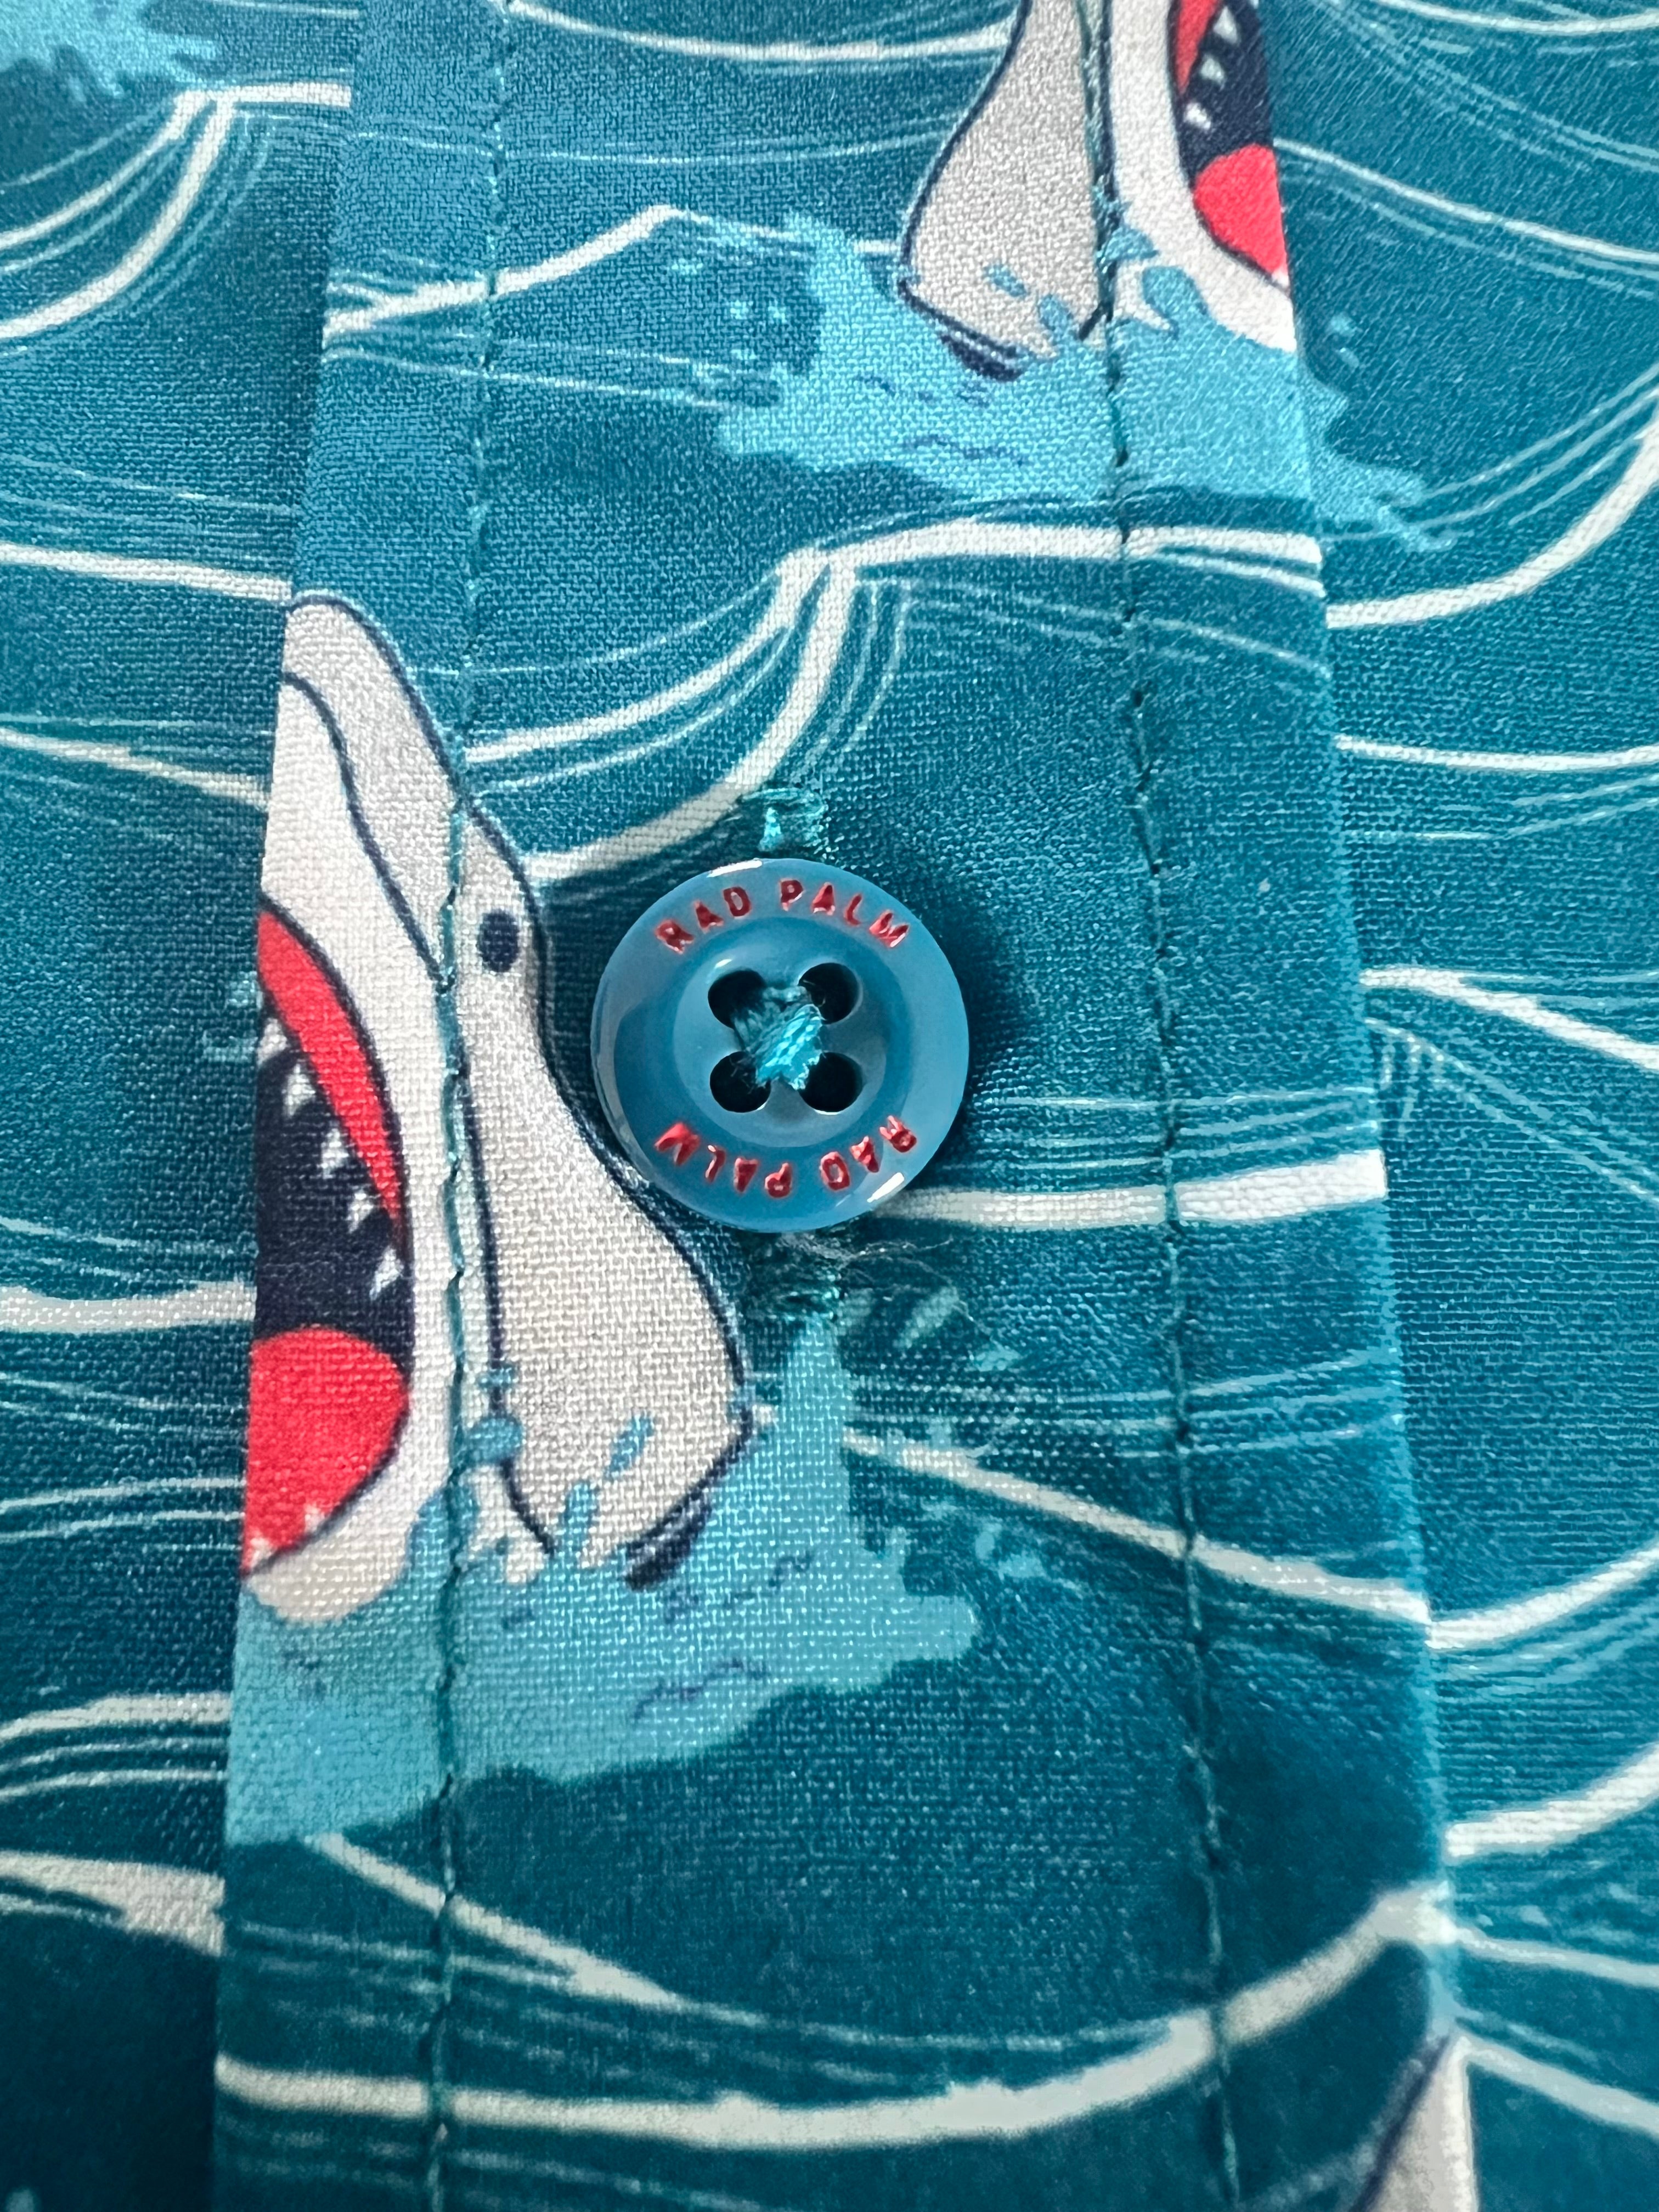 Shark Bait 2 Party Shirt